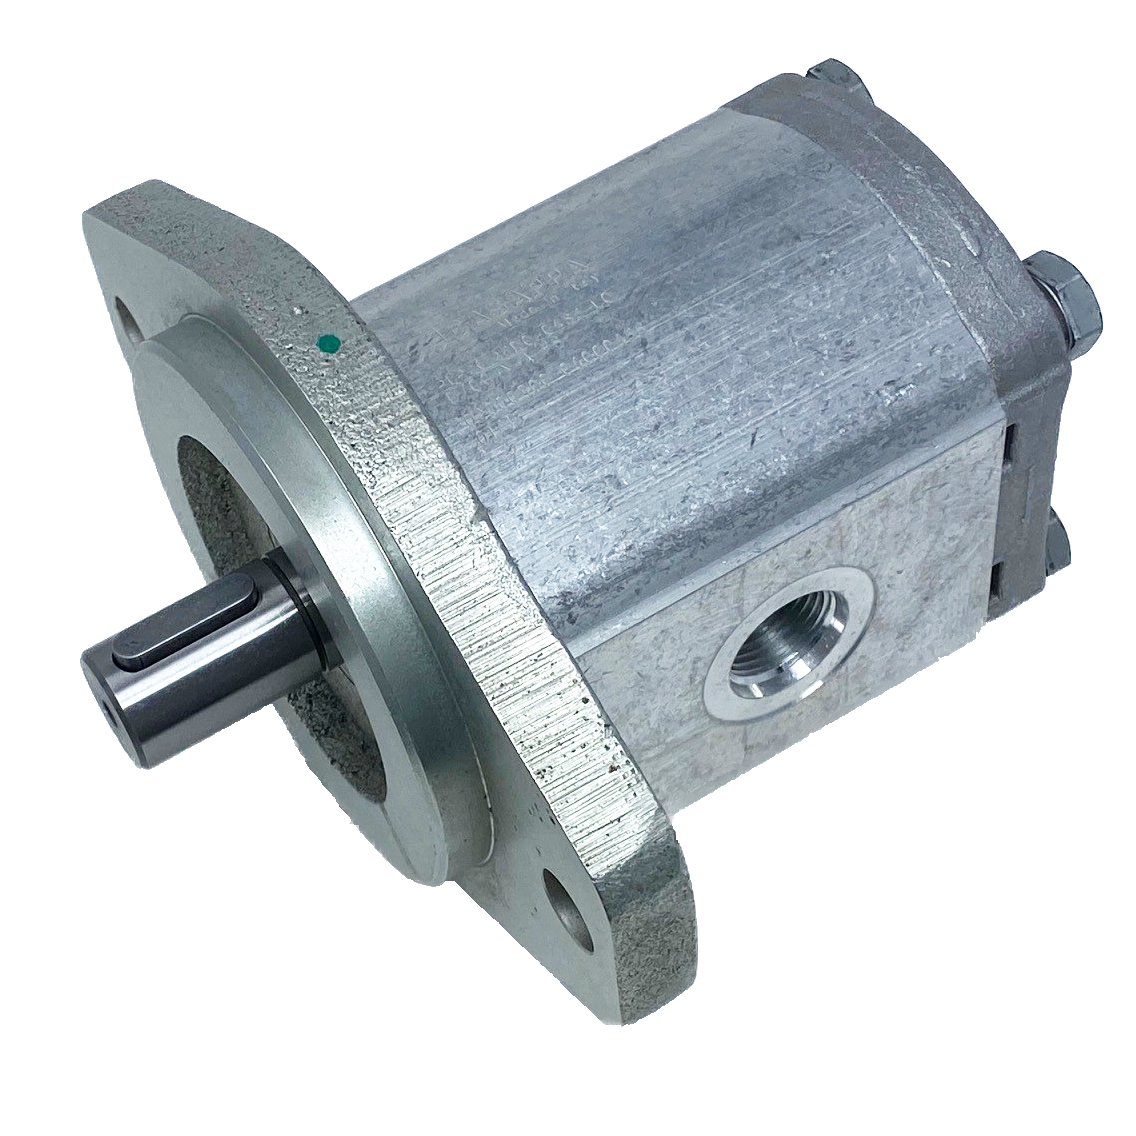 PLM20.31,5R0-32S5-LOC/OD-N-L : Casappa Polaris Gear Motor, 33.03cc, 1885psi, 2465RPM, Reversible, External Drain, 3/4" Bore x 1/4" Key Shaft, SAE B 2-Bolt Flange, 0.625 (5/8") #10 SAE In, 0.75 (3/4") #12 SAE Out, Aluminum Body, Cast Iron Flange